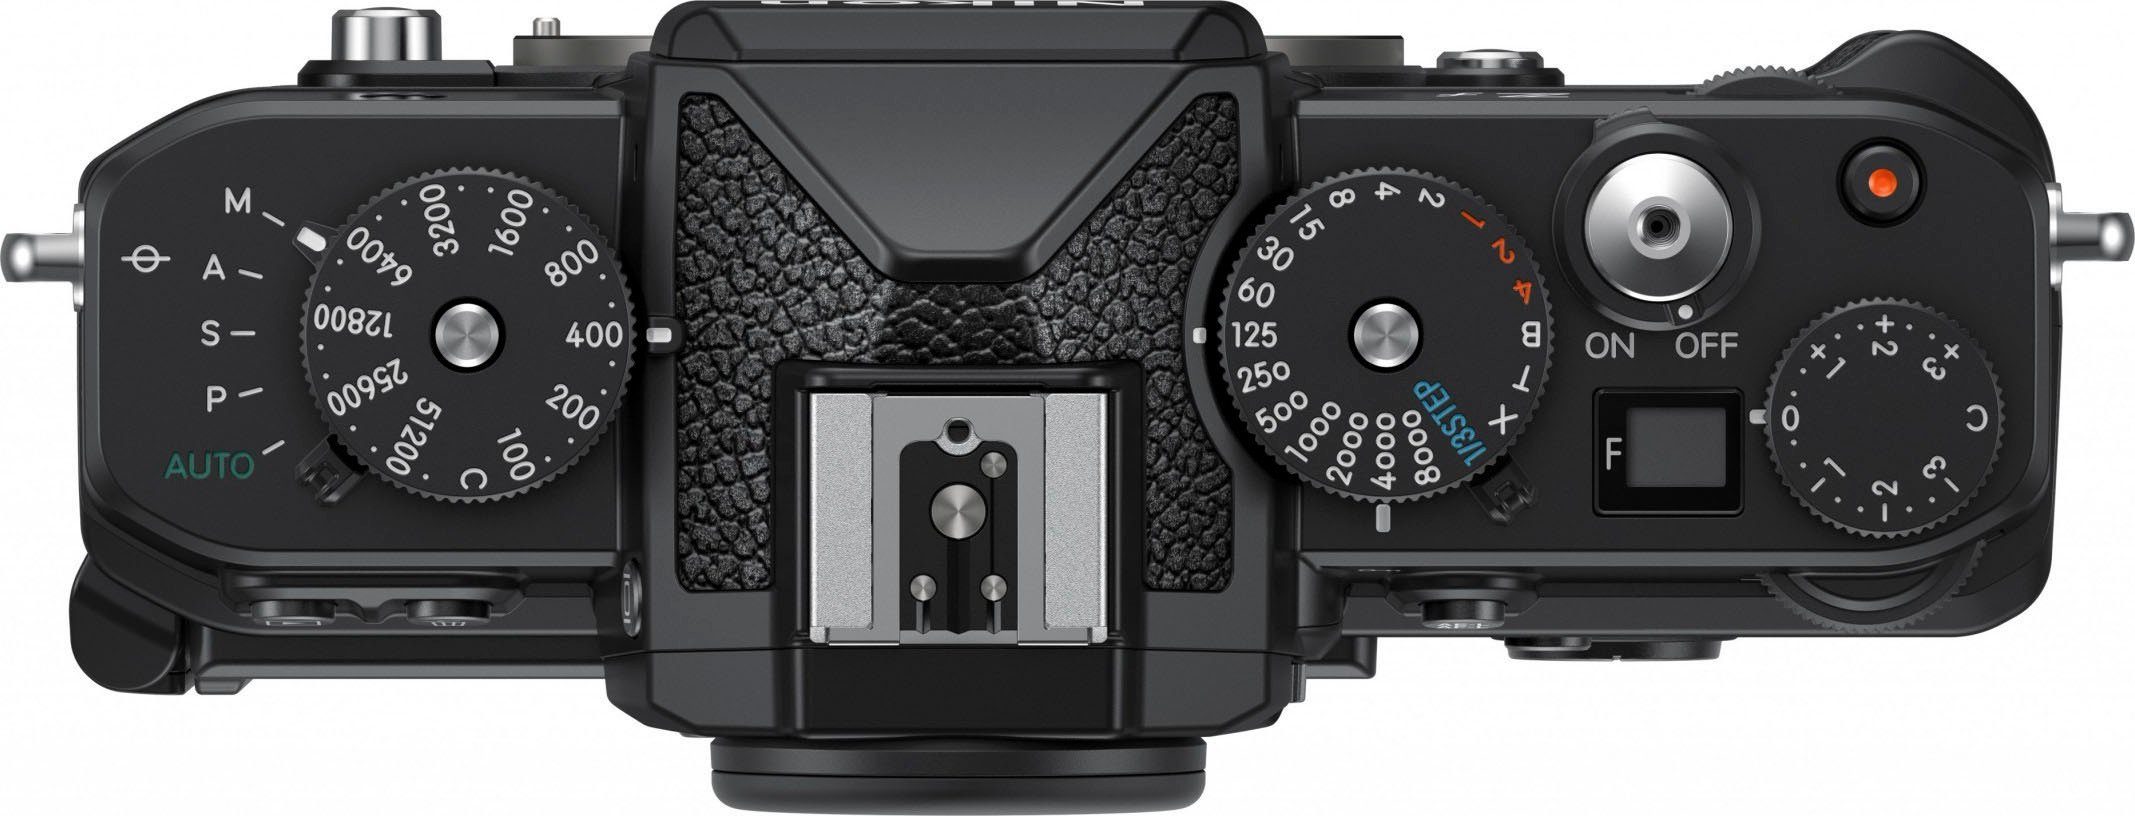 Nikon Z f + NIKKOR 24-70mm Z S, 24-70 f4.0 Z Systemkamera f4 (Nikkor Bluetooth, mm WLAN)